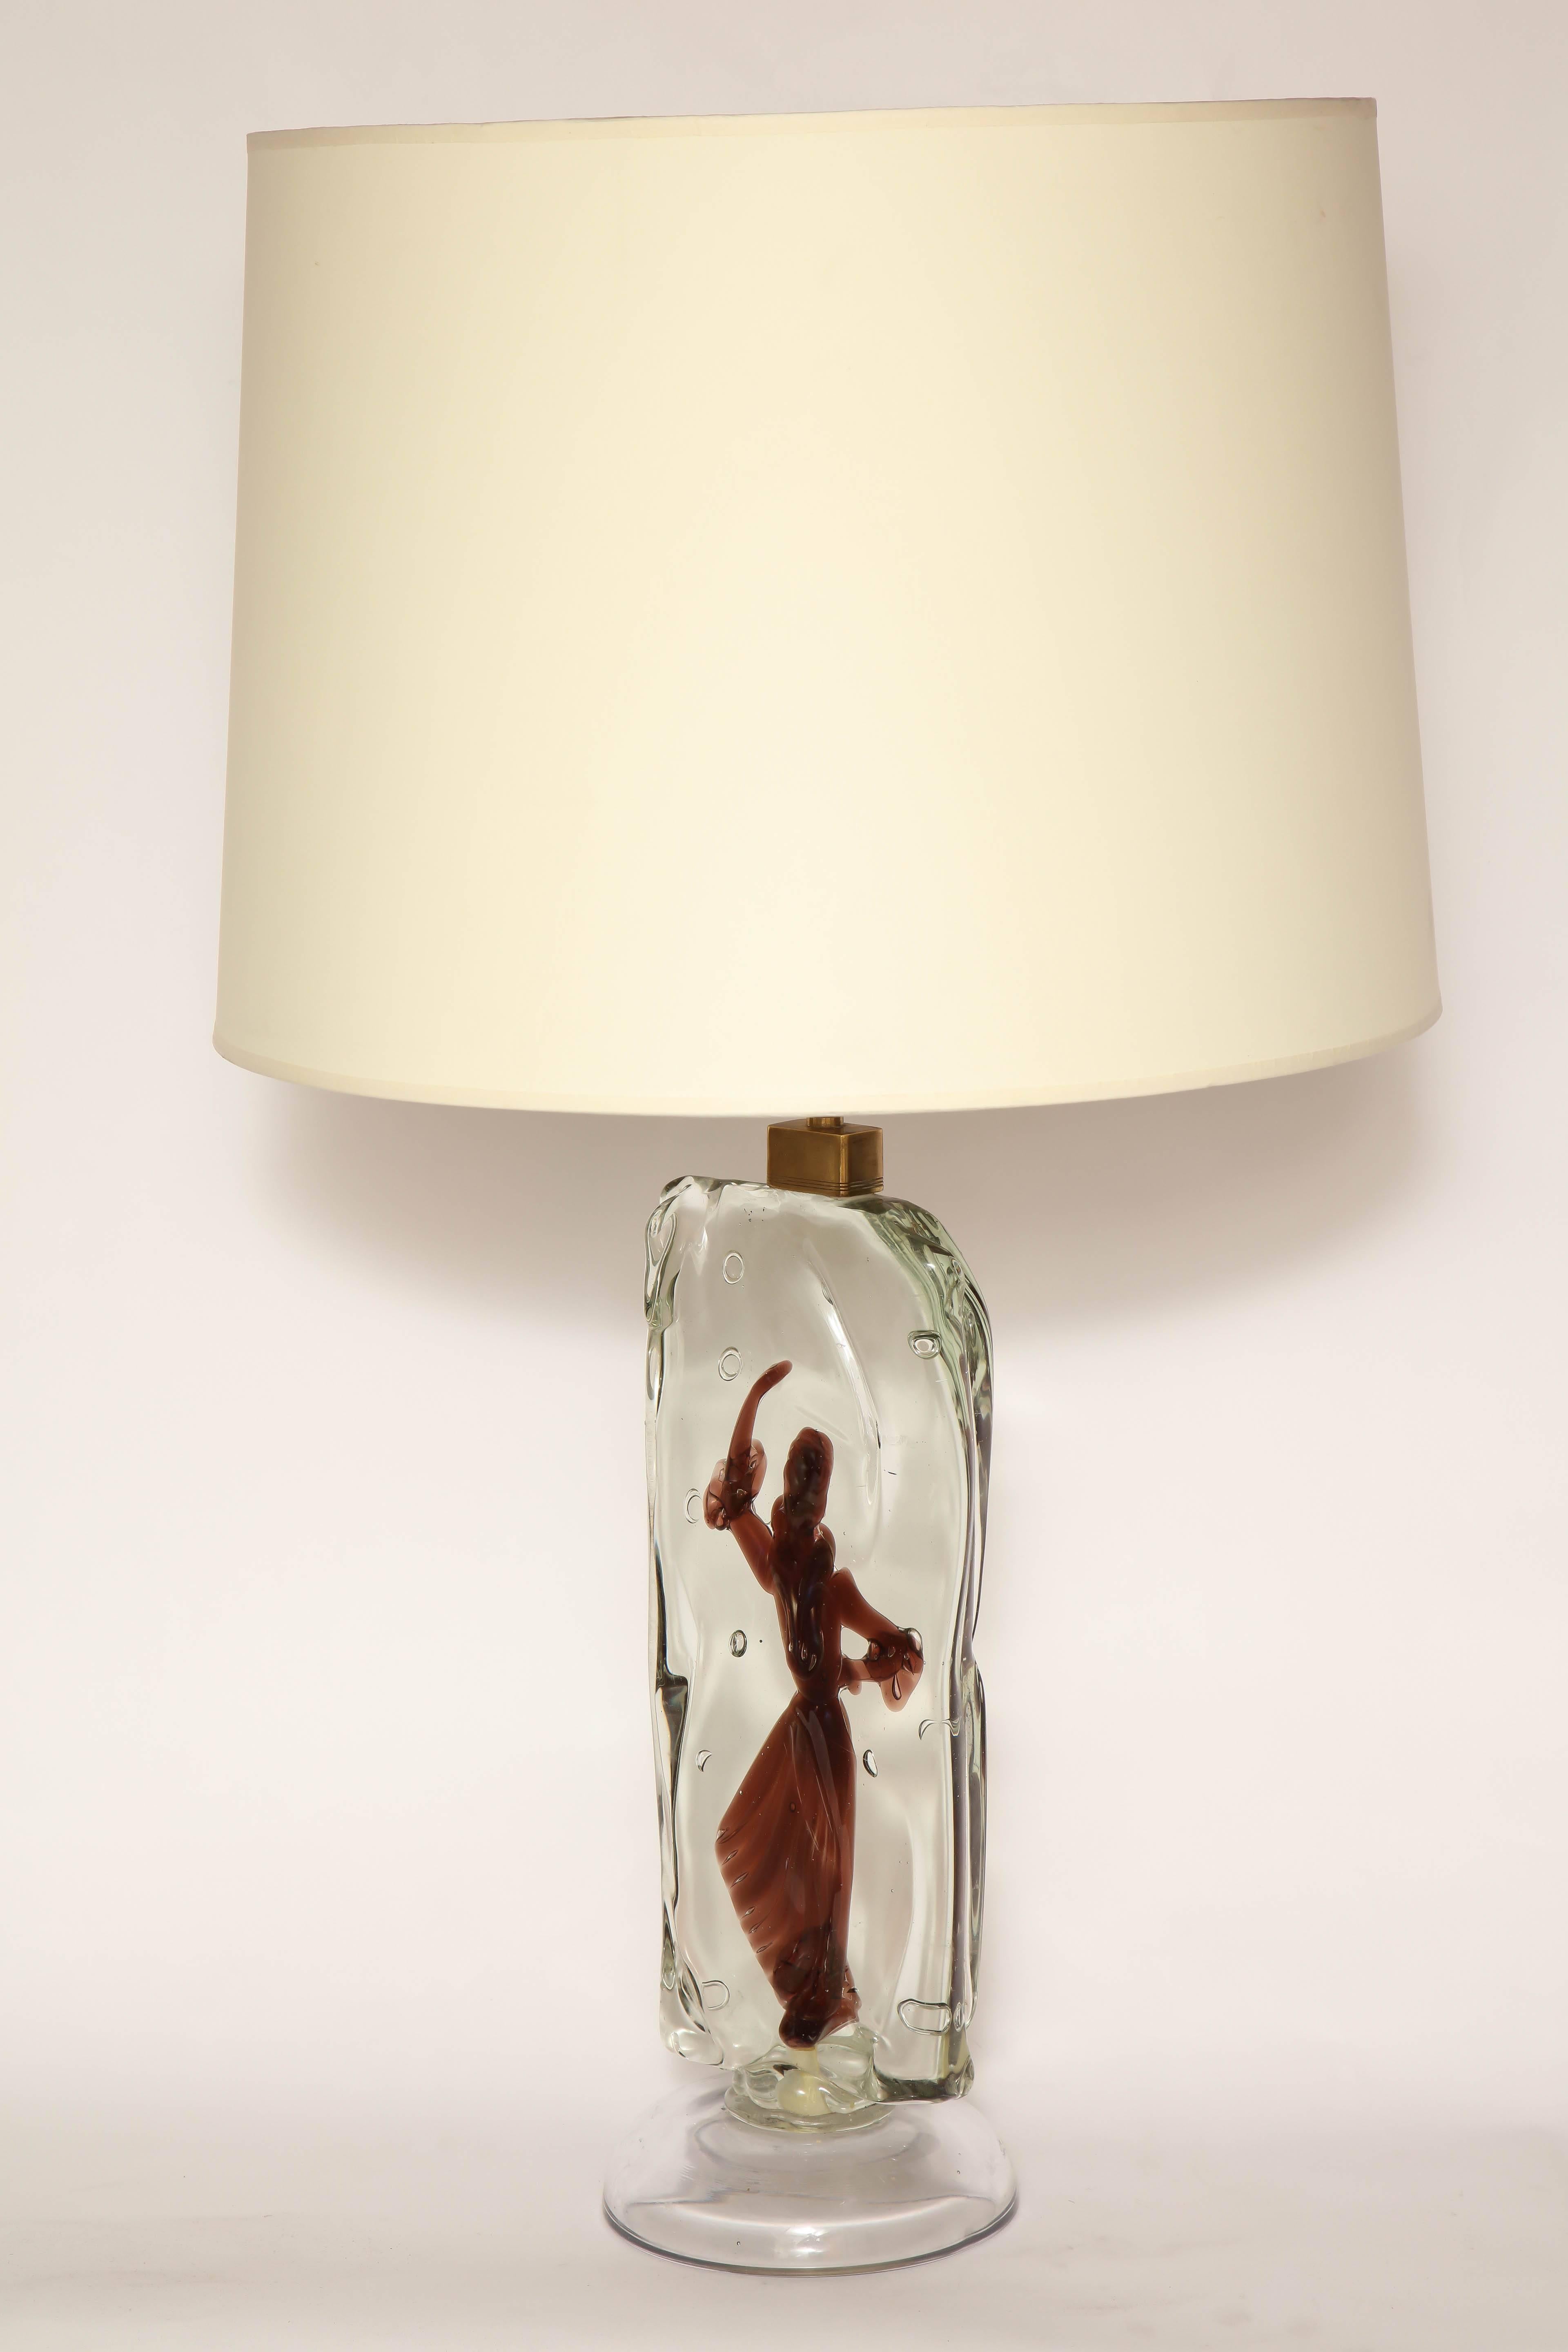 Seguso Cenadese Italian art glass table lamp Mid-Century Modern.